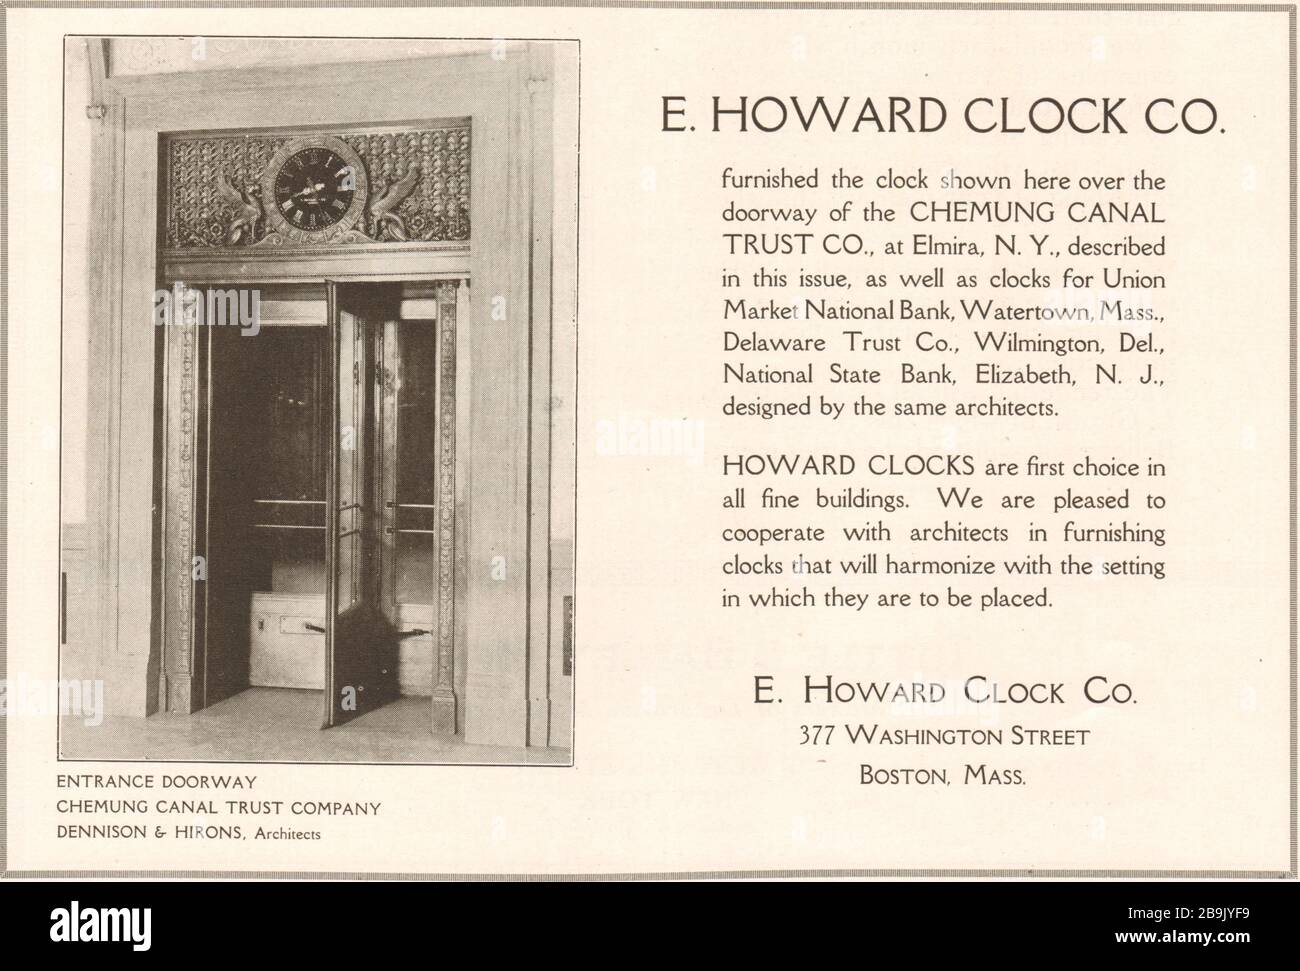 Entrance doorway, Chemung Canal Trust Company. Dennison & Hirons, Architects. E. Howard Clock Co. 377 Washington Street, Boston, Mass. (1922) Stock Photo